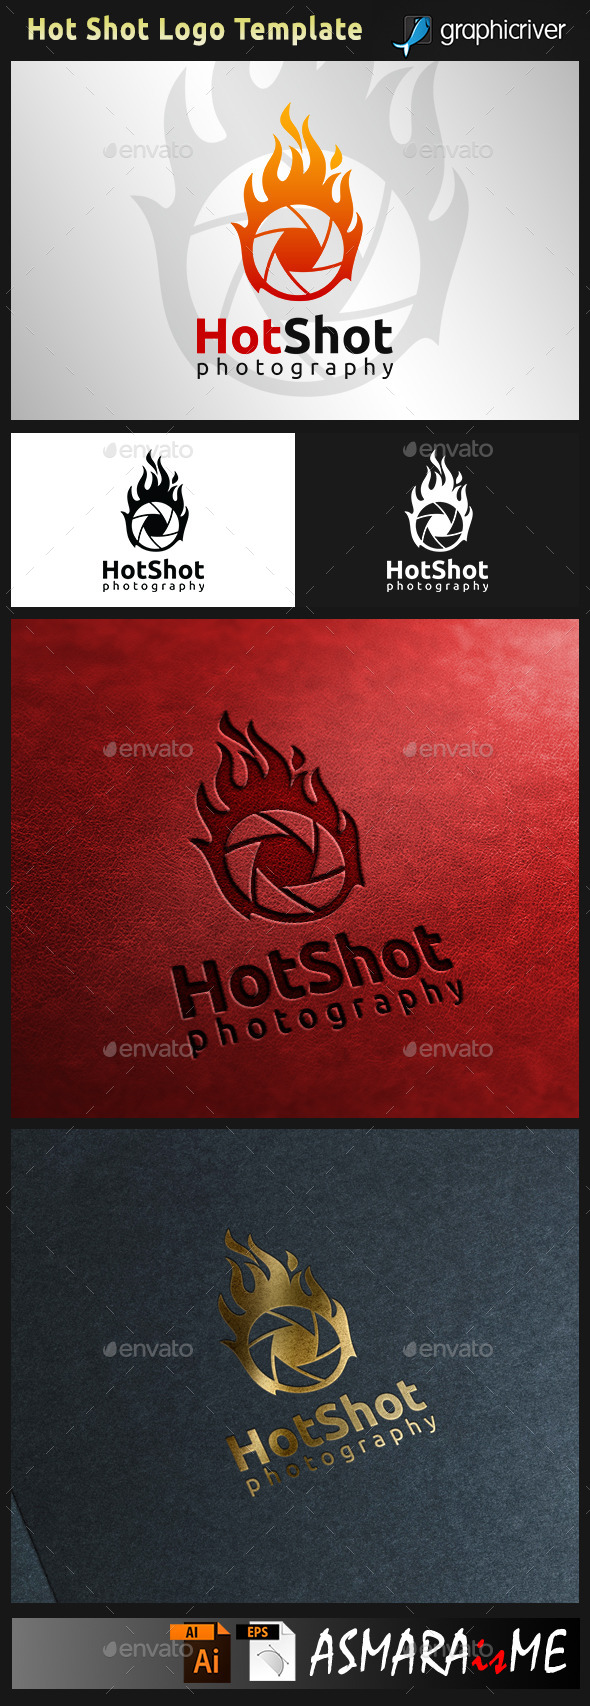 Camera Logo - Hot Shot Photography